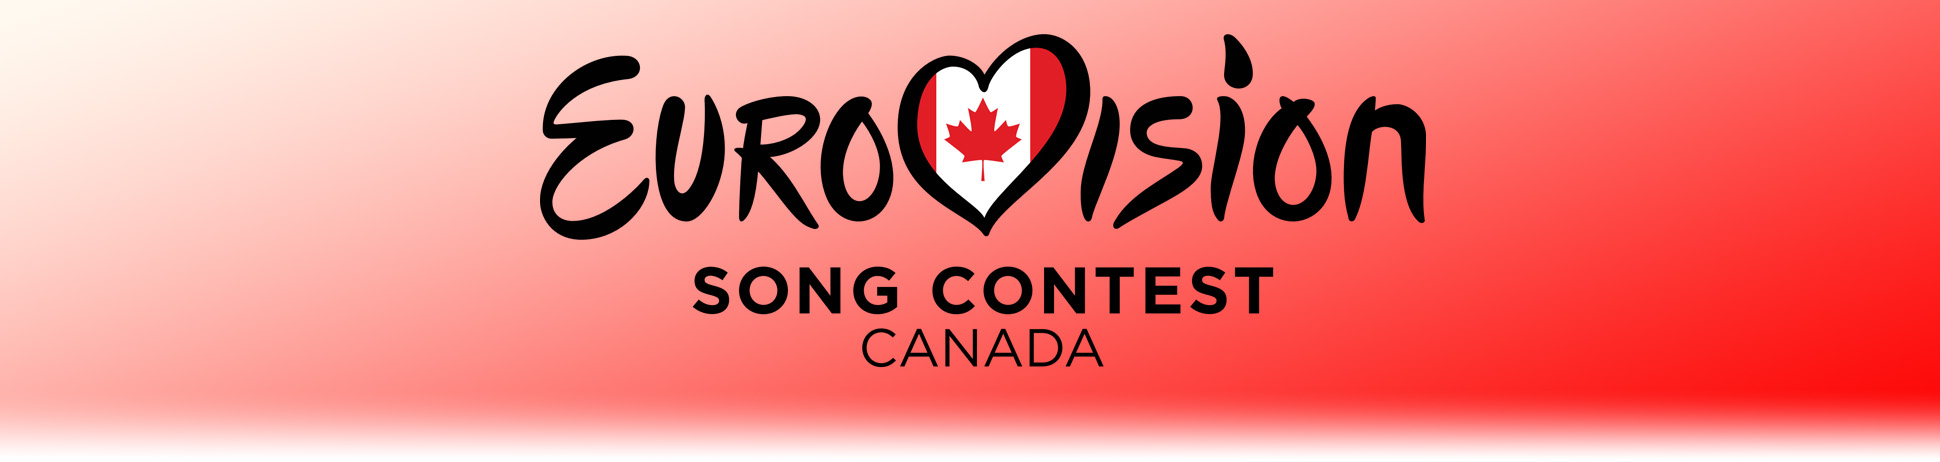 Eurovision Song Contest Canada